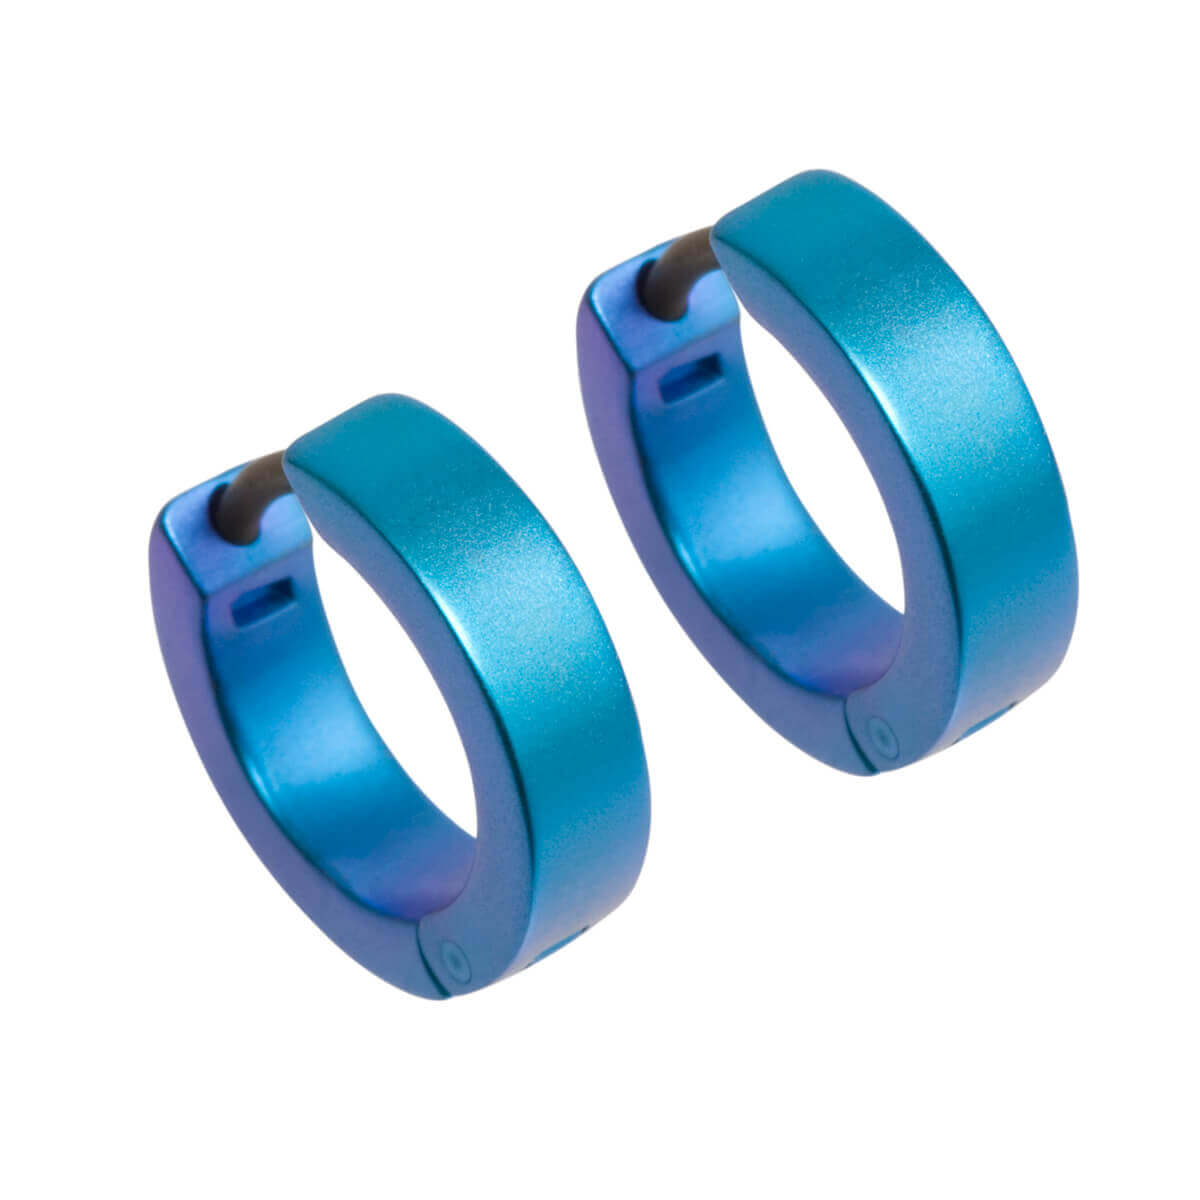 Titanium Small Hinged Hoop Earrings - Blue/Green Tones